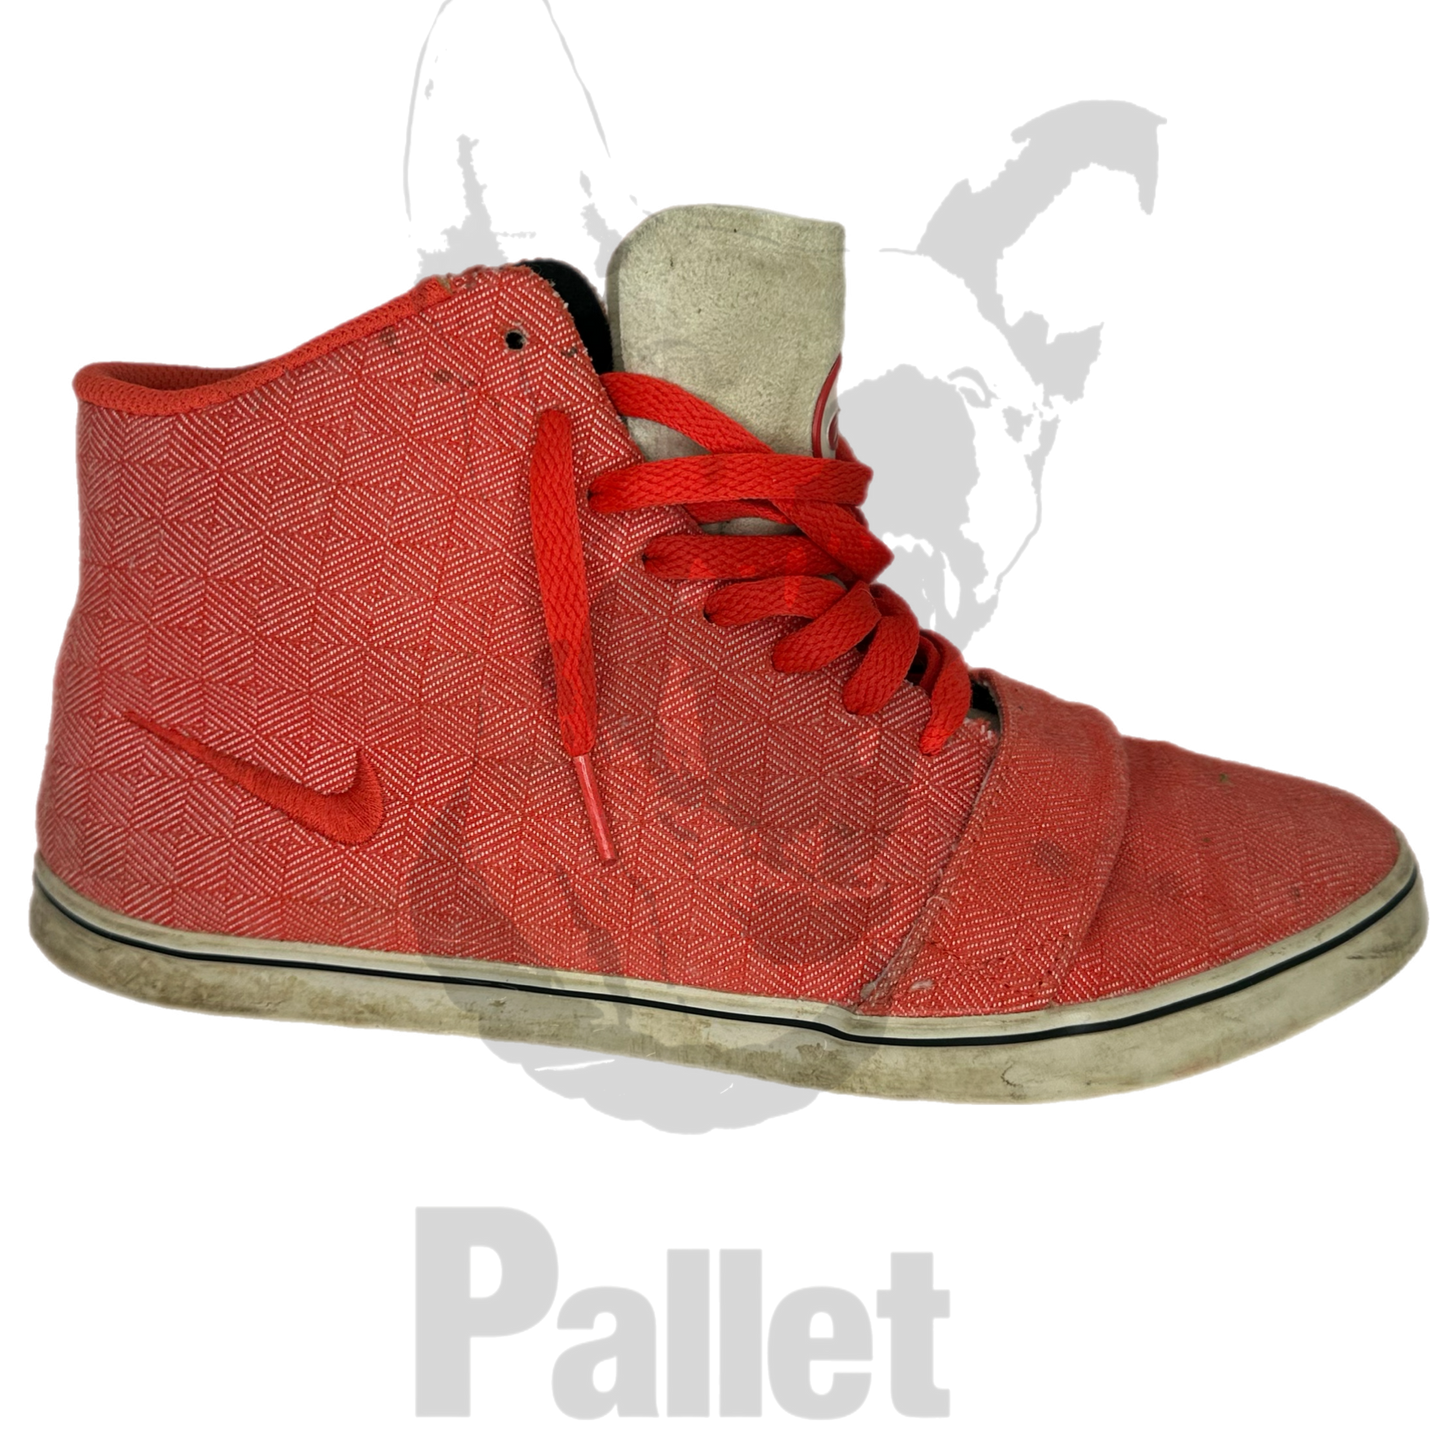 Nike - "6.0 Women's Shoe Red" - Size 9.5